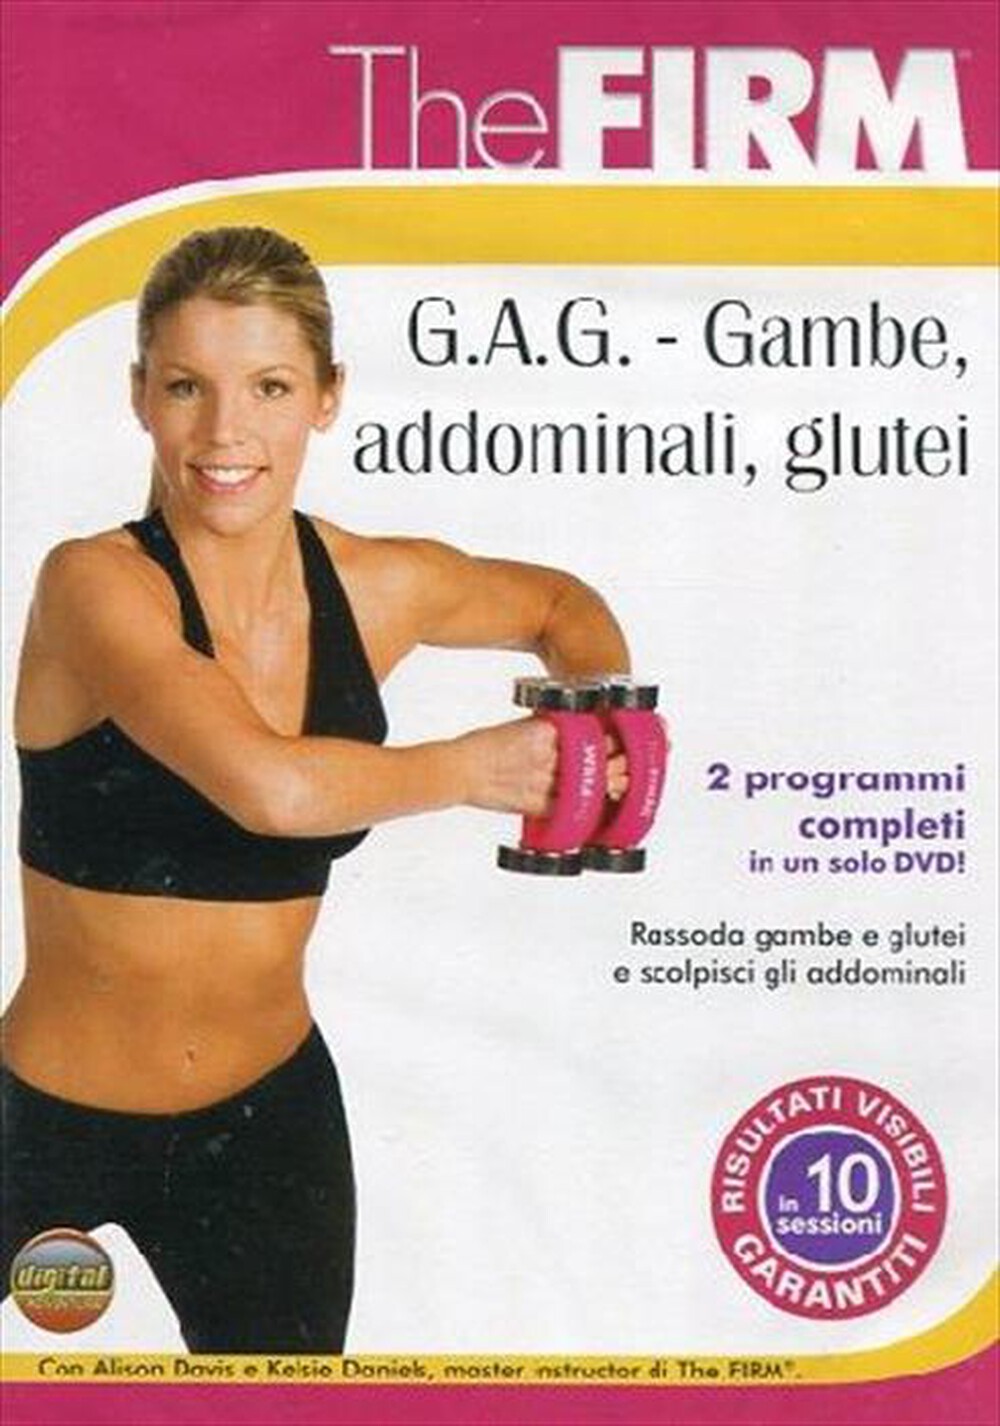 "GAIAM - Firm (The) - Gag - Gambe Addominali Glutei (Dvd+"